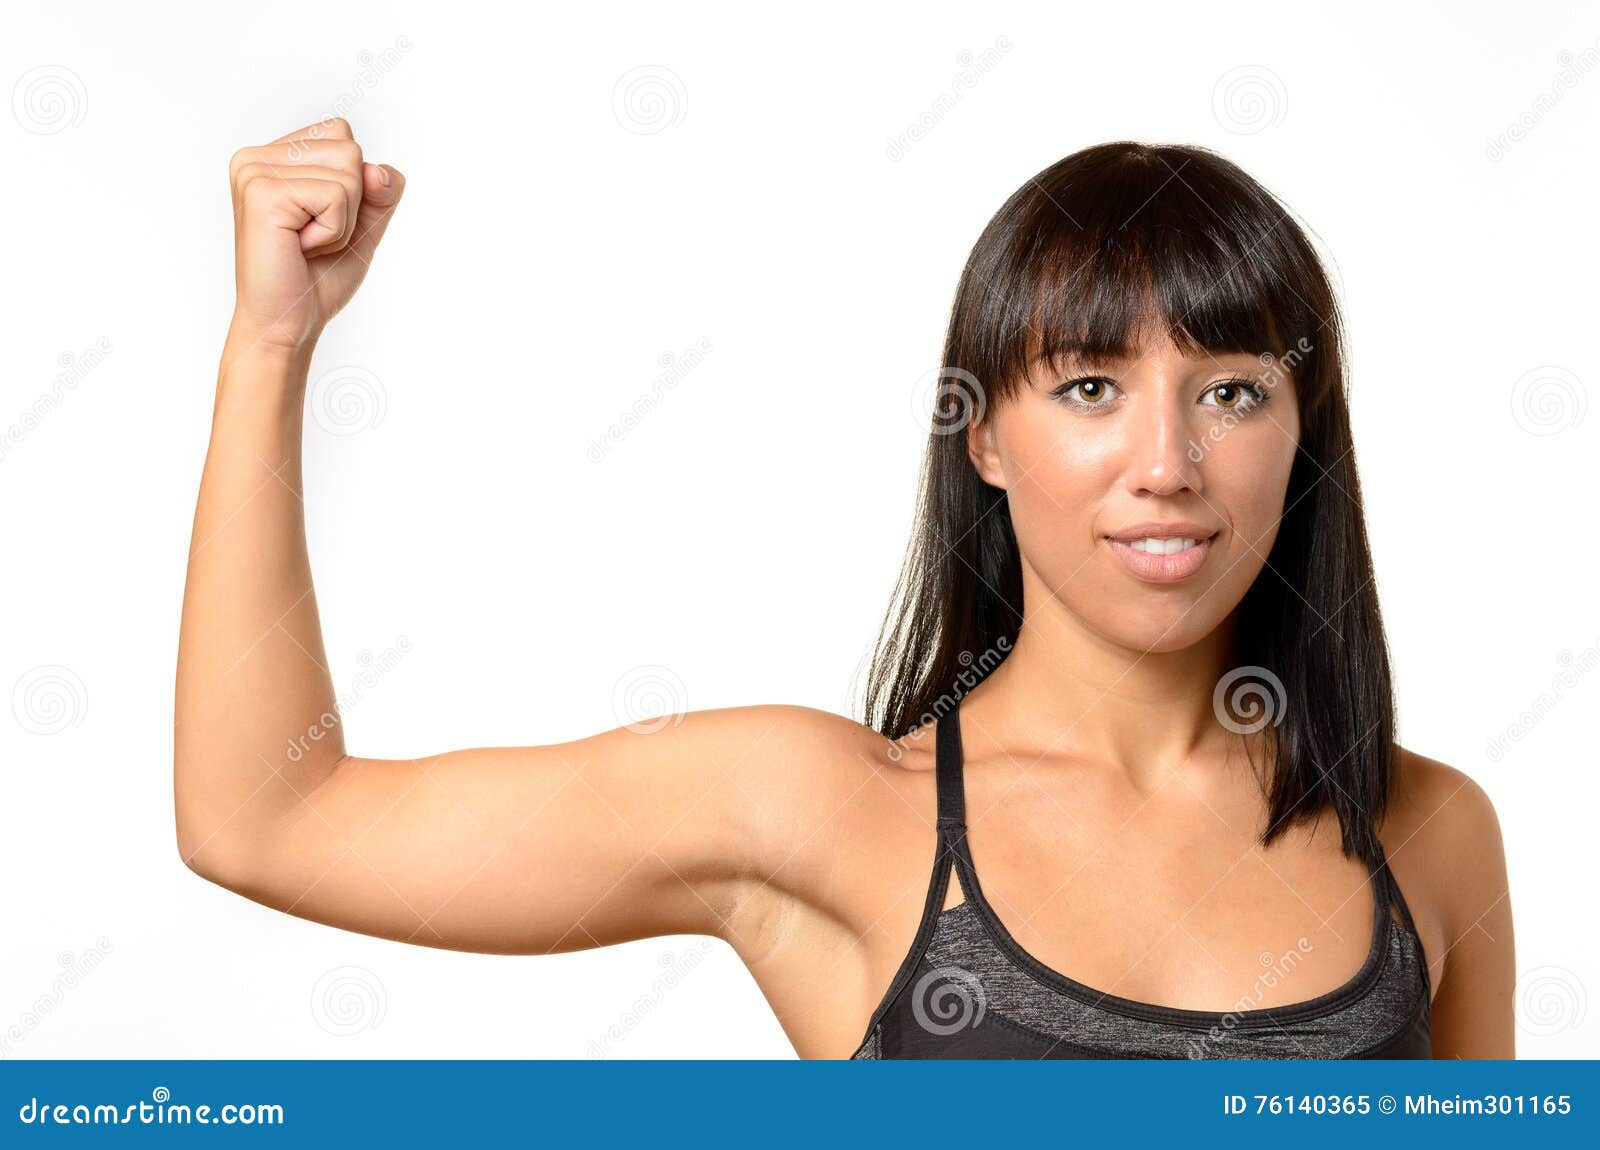 2,687 Arm Toned Woman Stock Photos - Free & Royalty-Free Stock